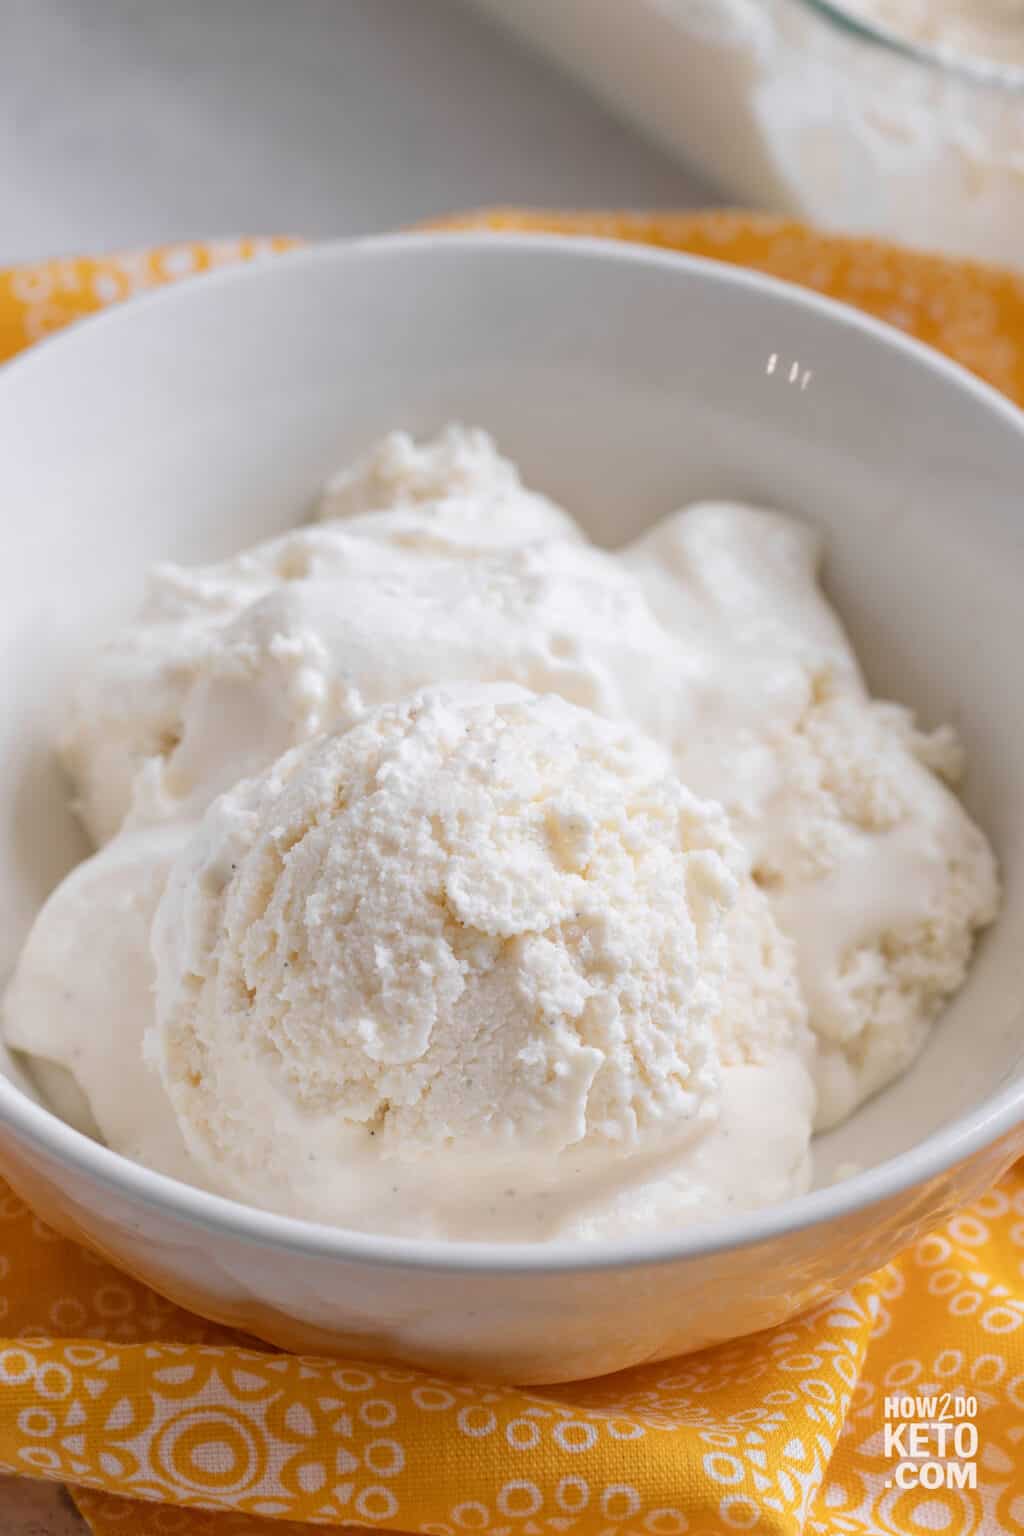 Smooth and creamy, this keto vanilla ice cream